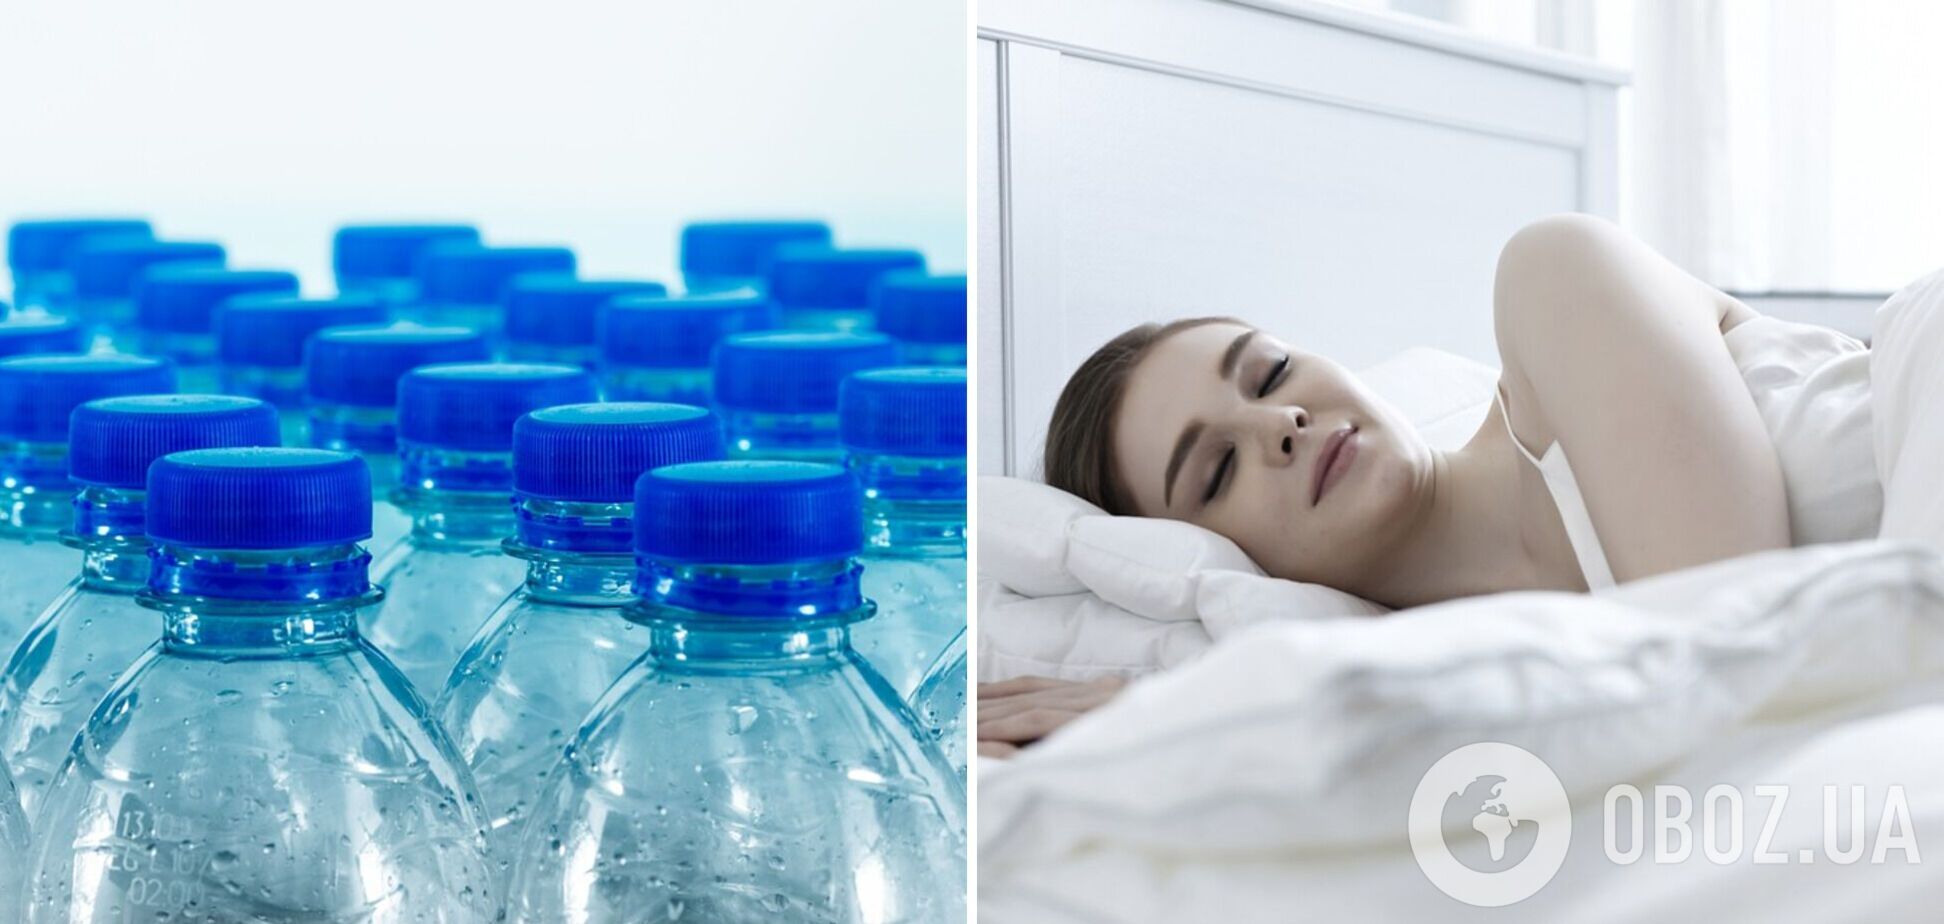 Как вода влияет на сон человека: врачи рассказали о связи